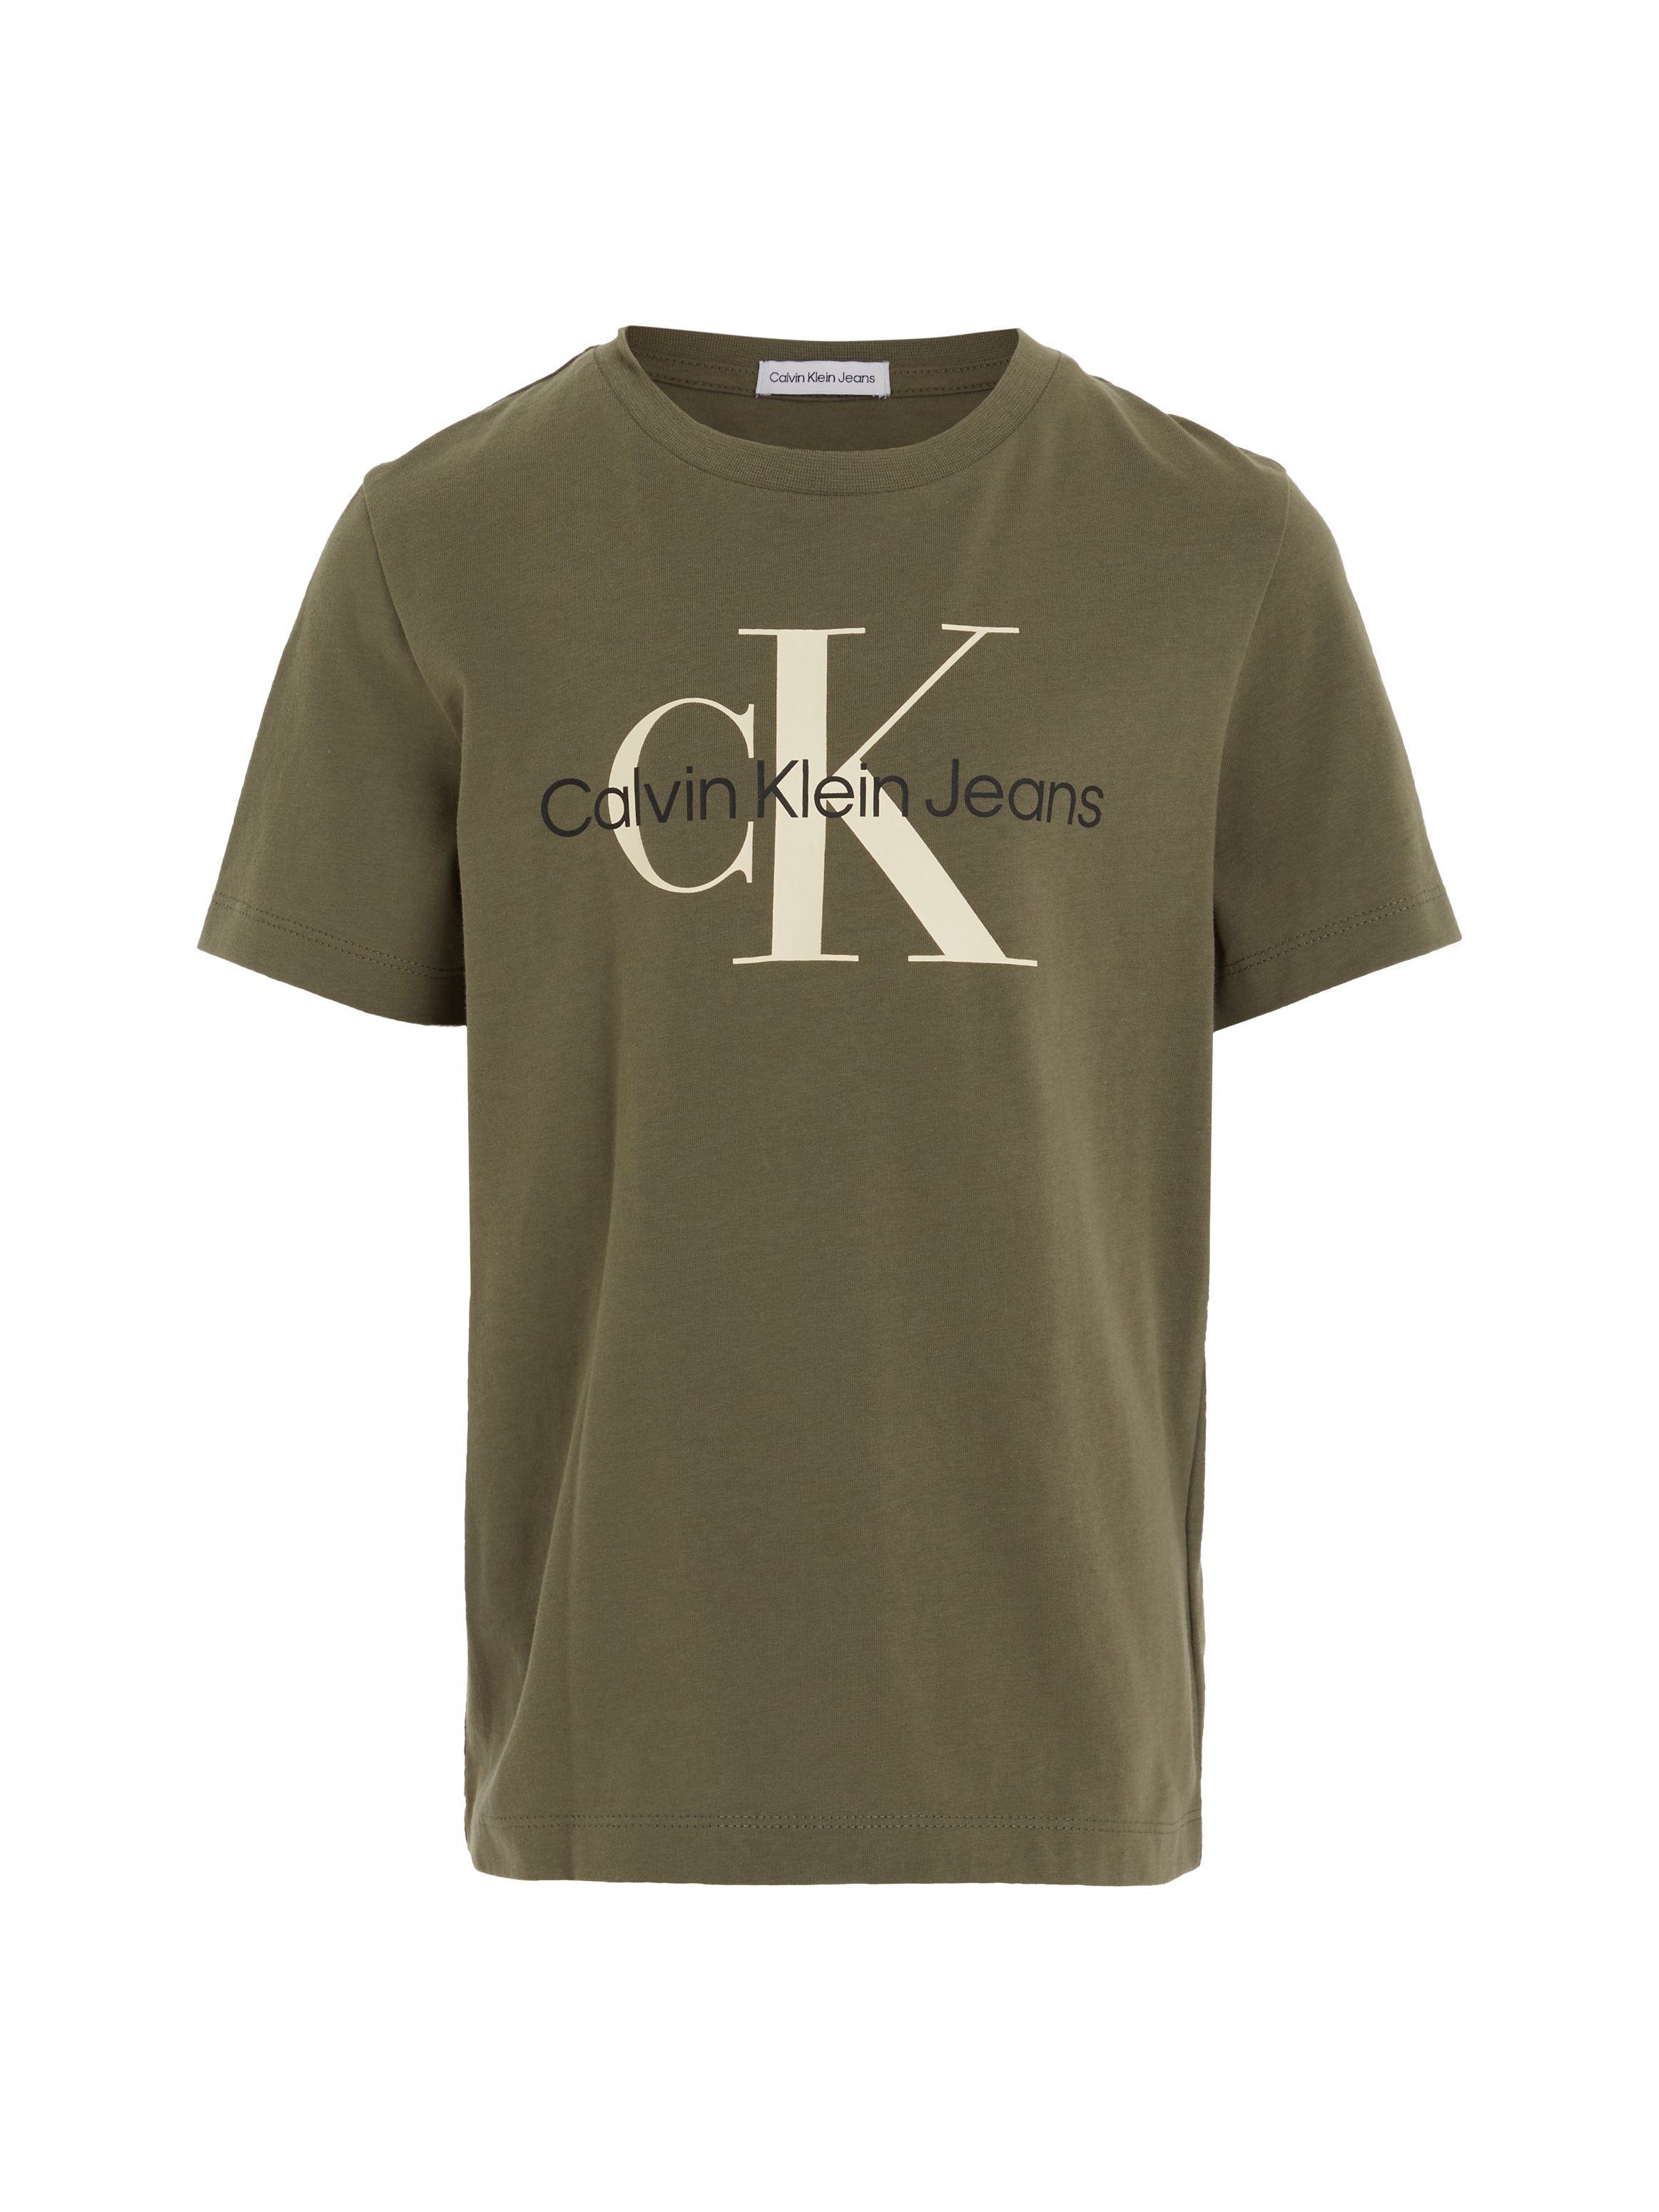 Calvin Klein Jeans CK T-Shirt Dusty SS T-SHIRT Olive MONOGRAM